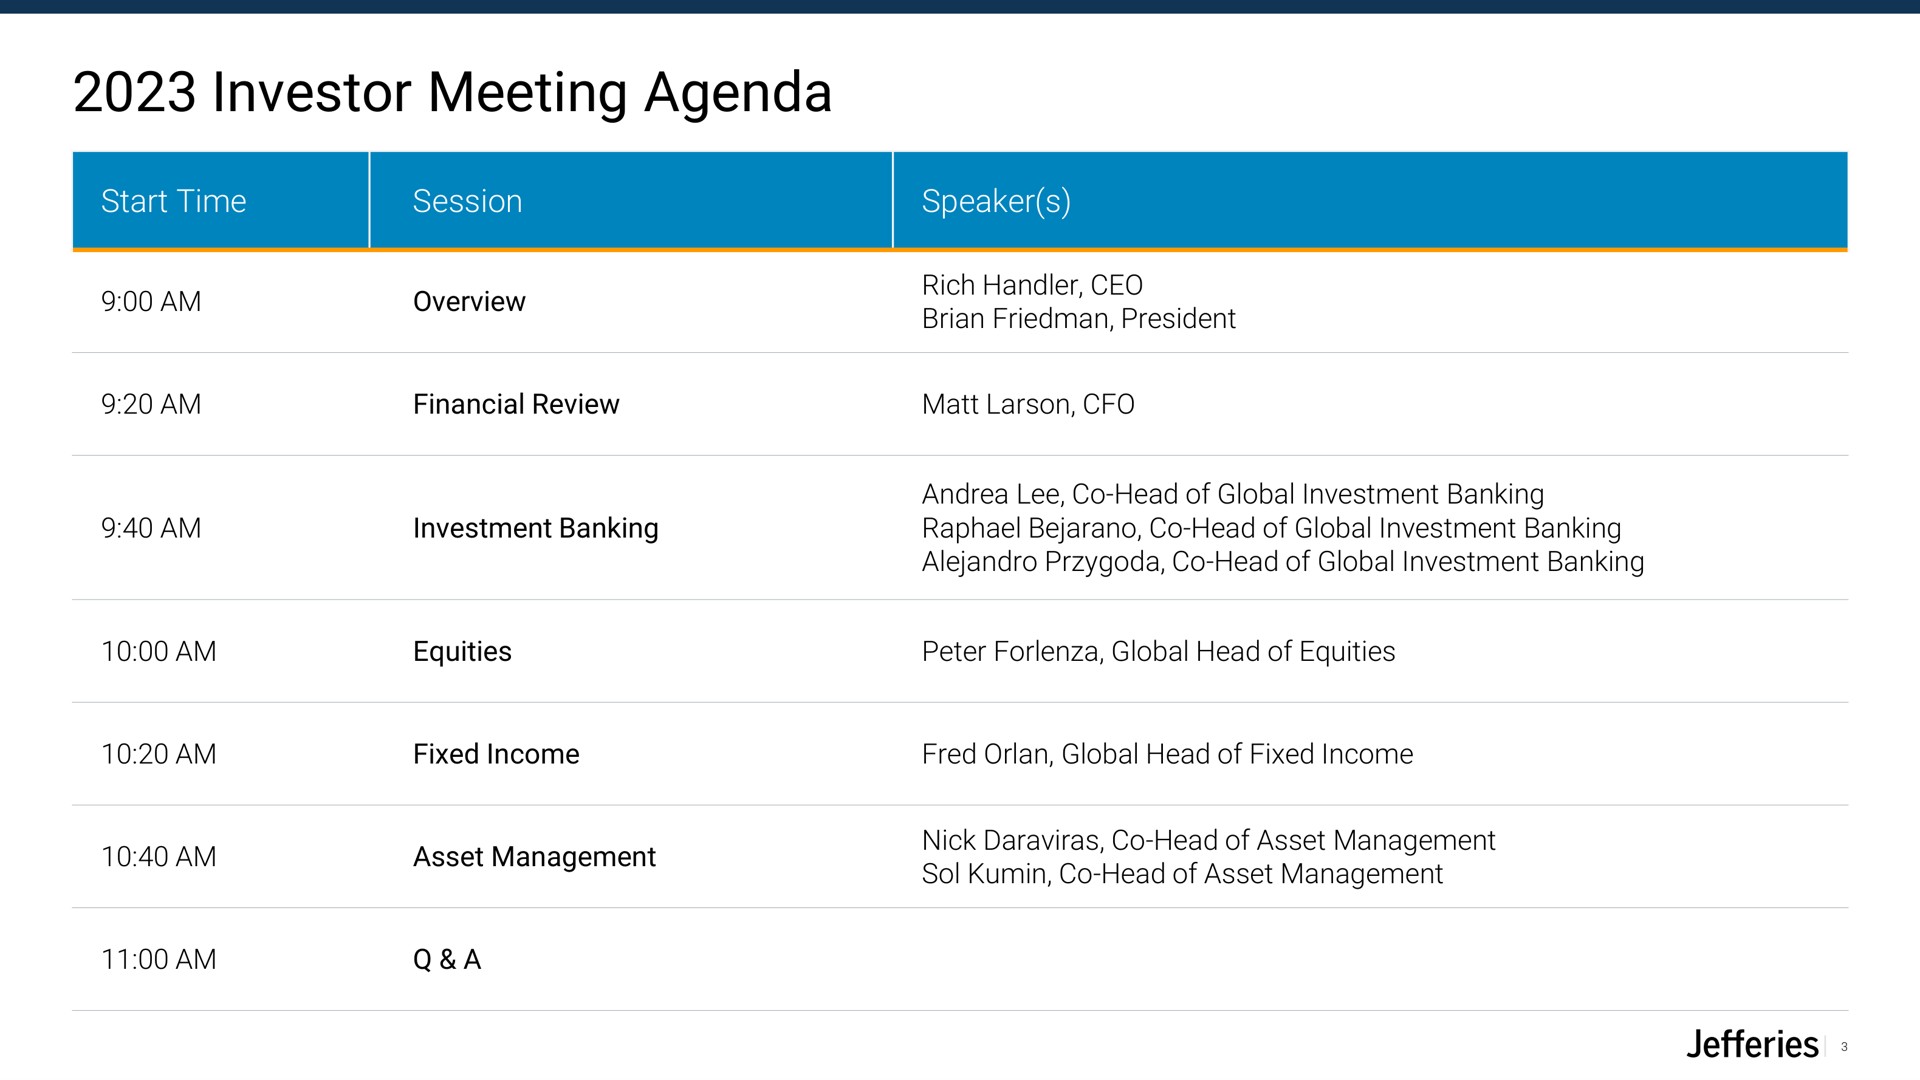 investor meeting agenda | Jefferies Financial Group